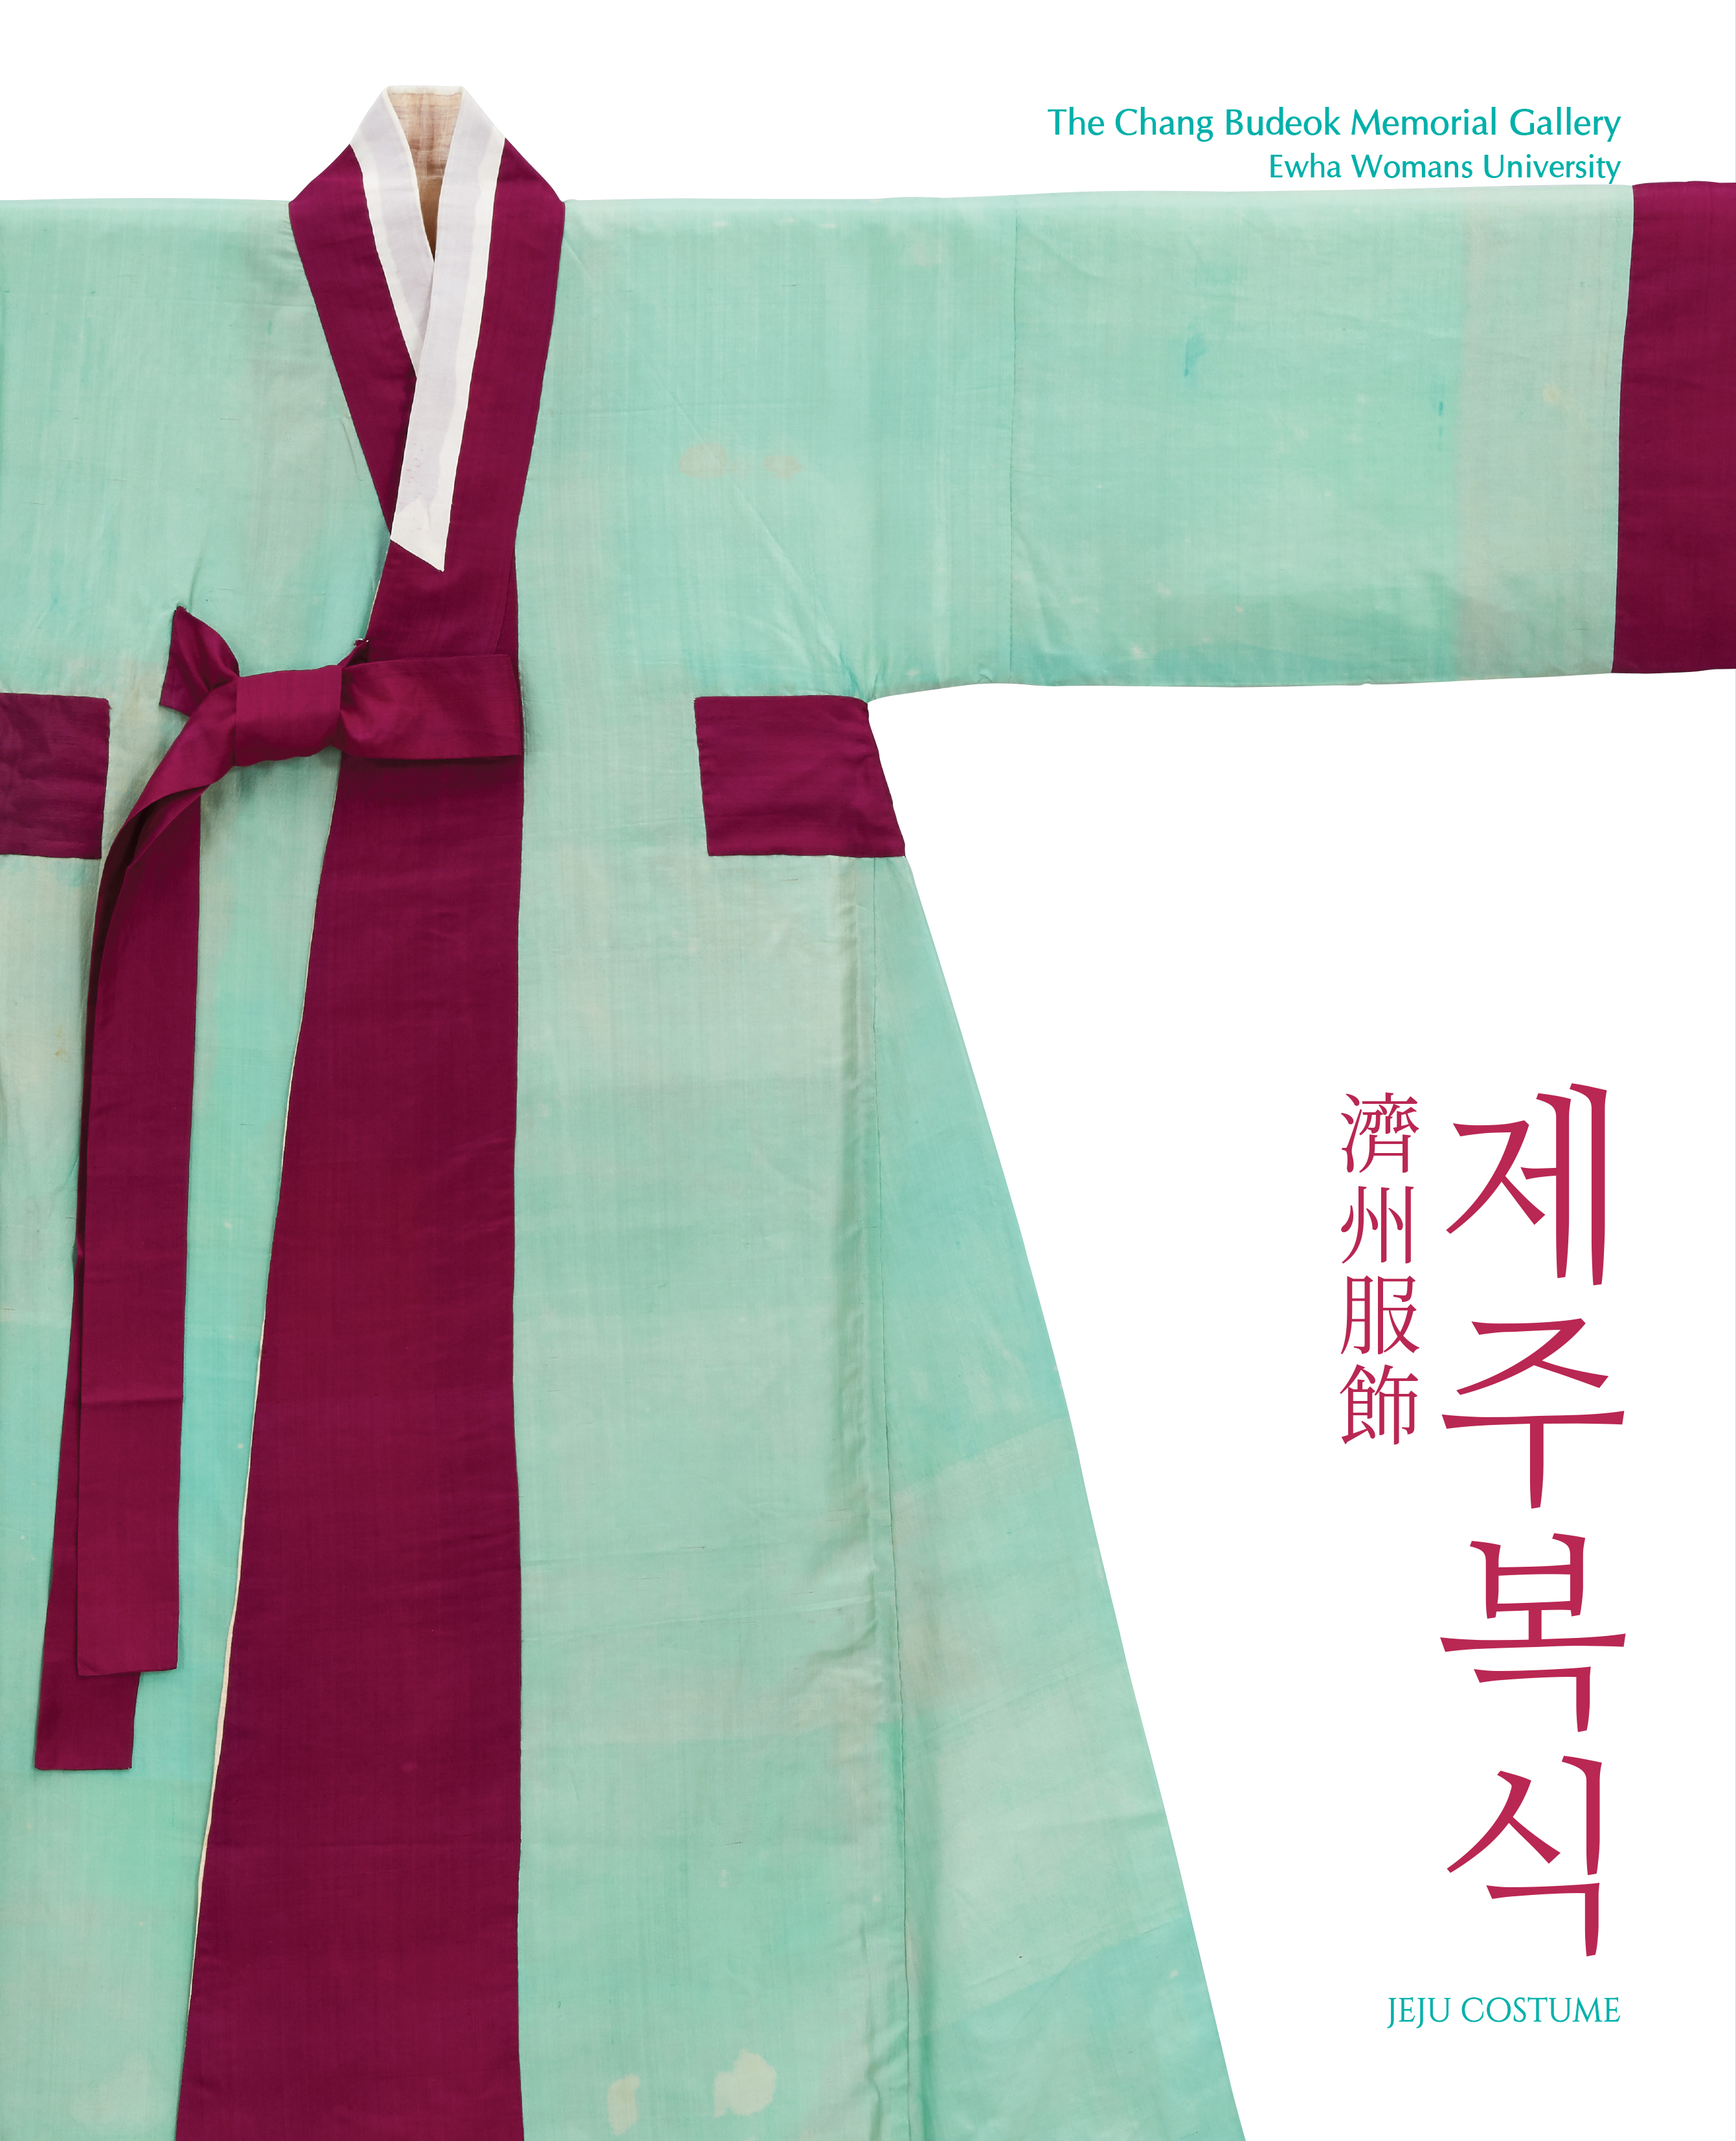 The Chang Budeok Memorial Gallery Ewha Womans University 제주복식 JEJU COSTUME